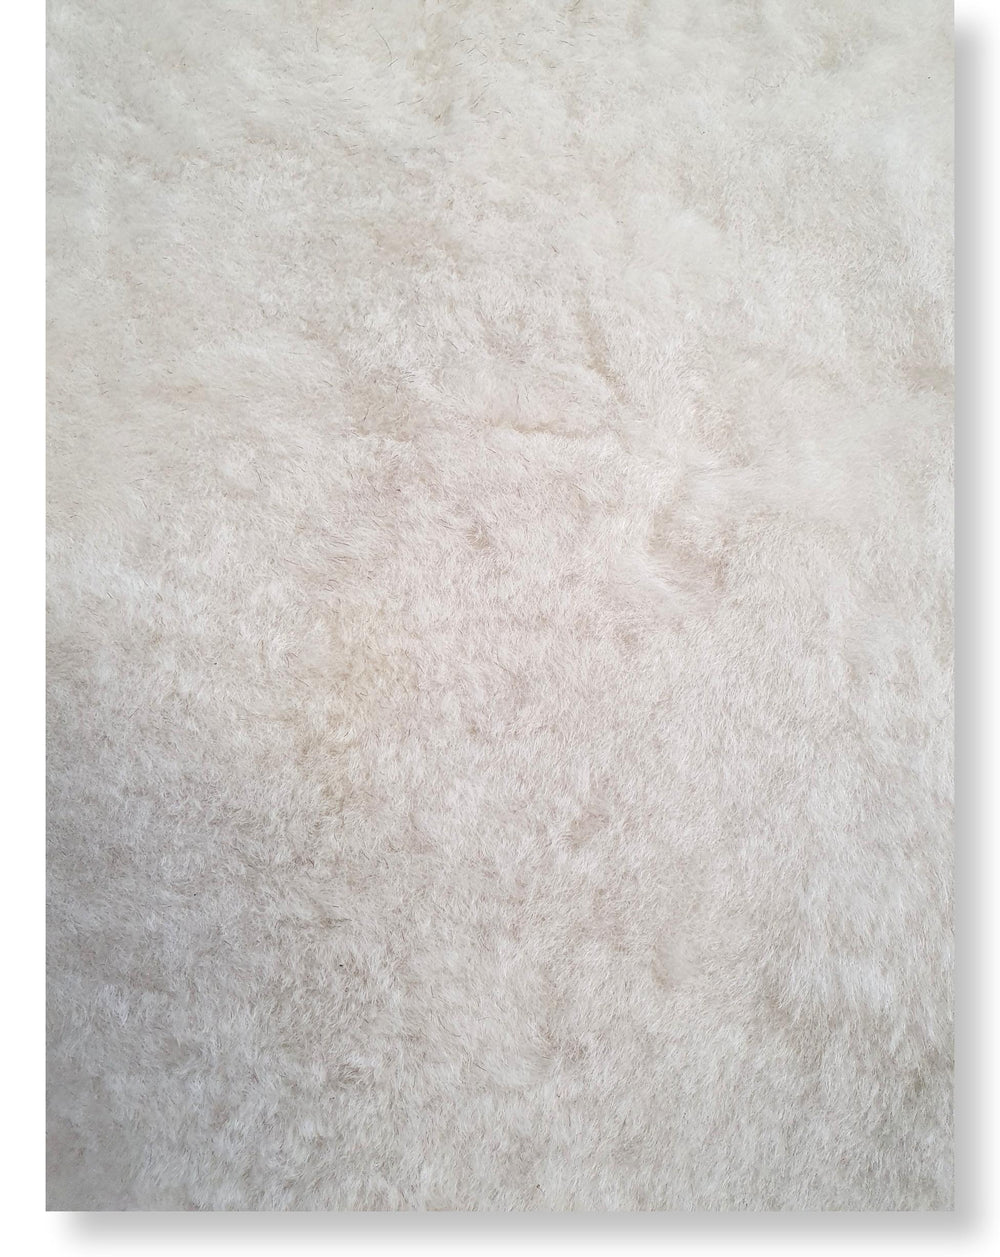 Lamb White - Dressed Fur Skin - Fur | STAMPE PELS